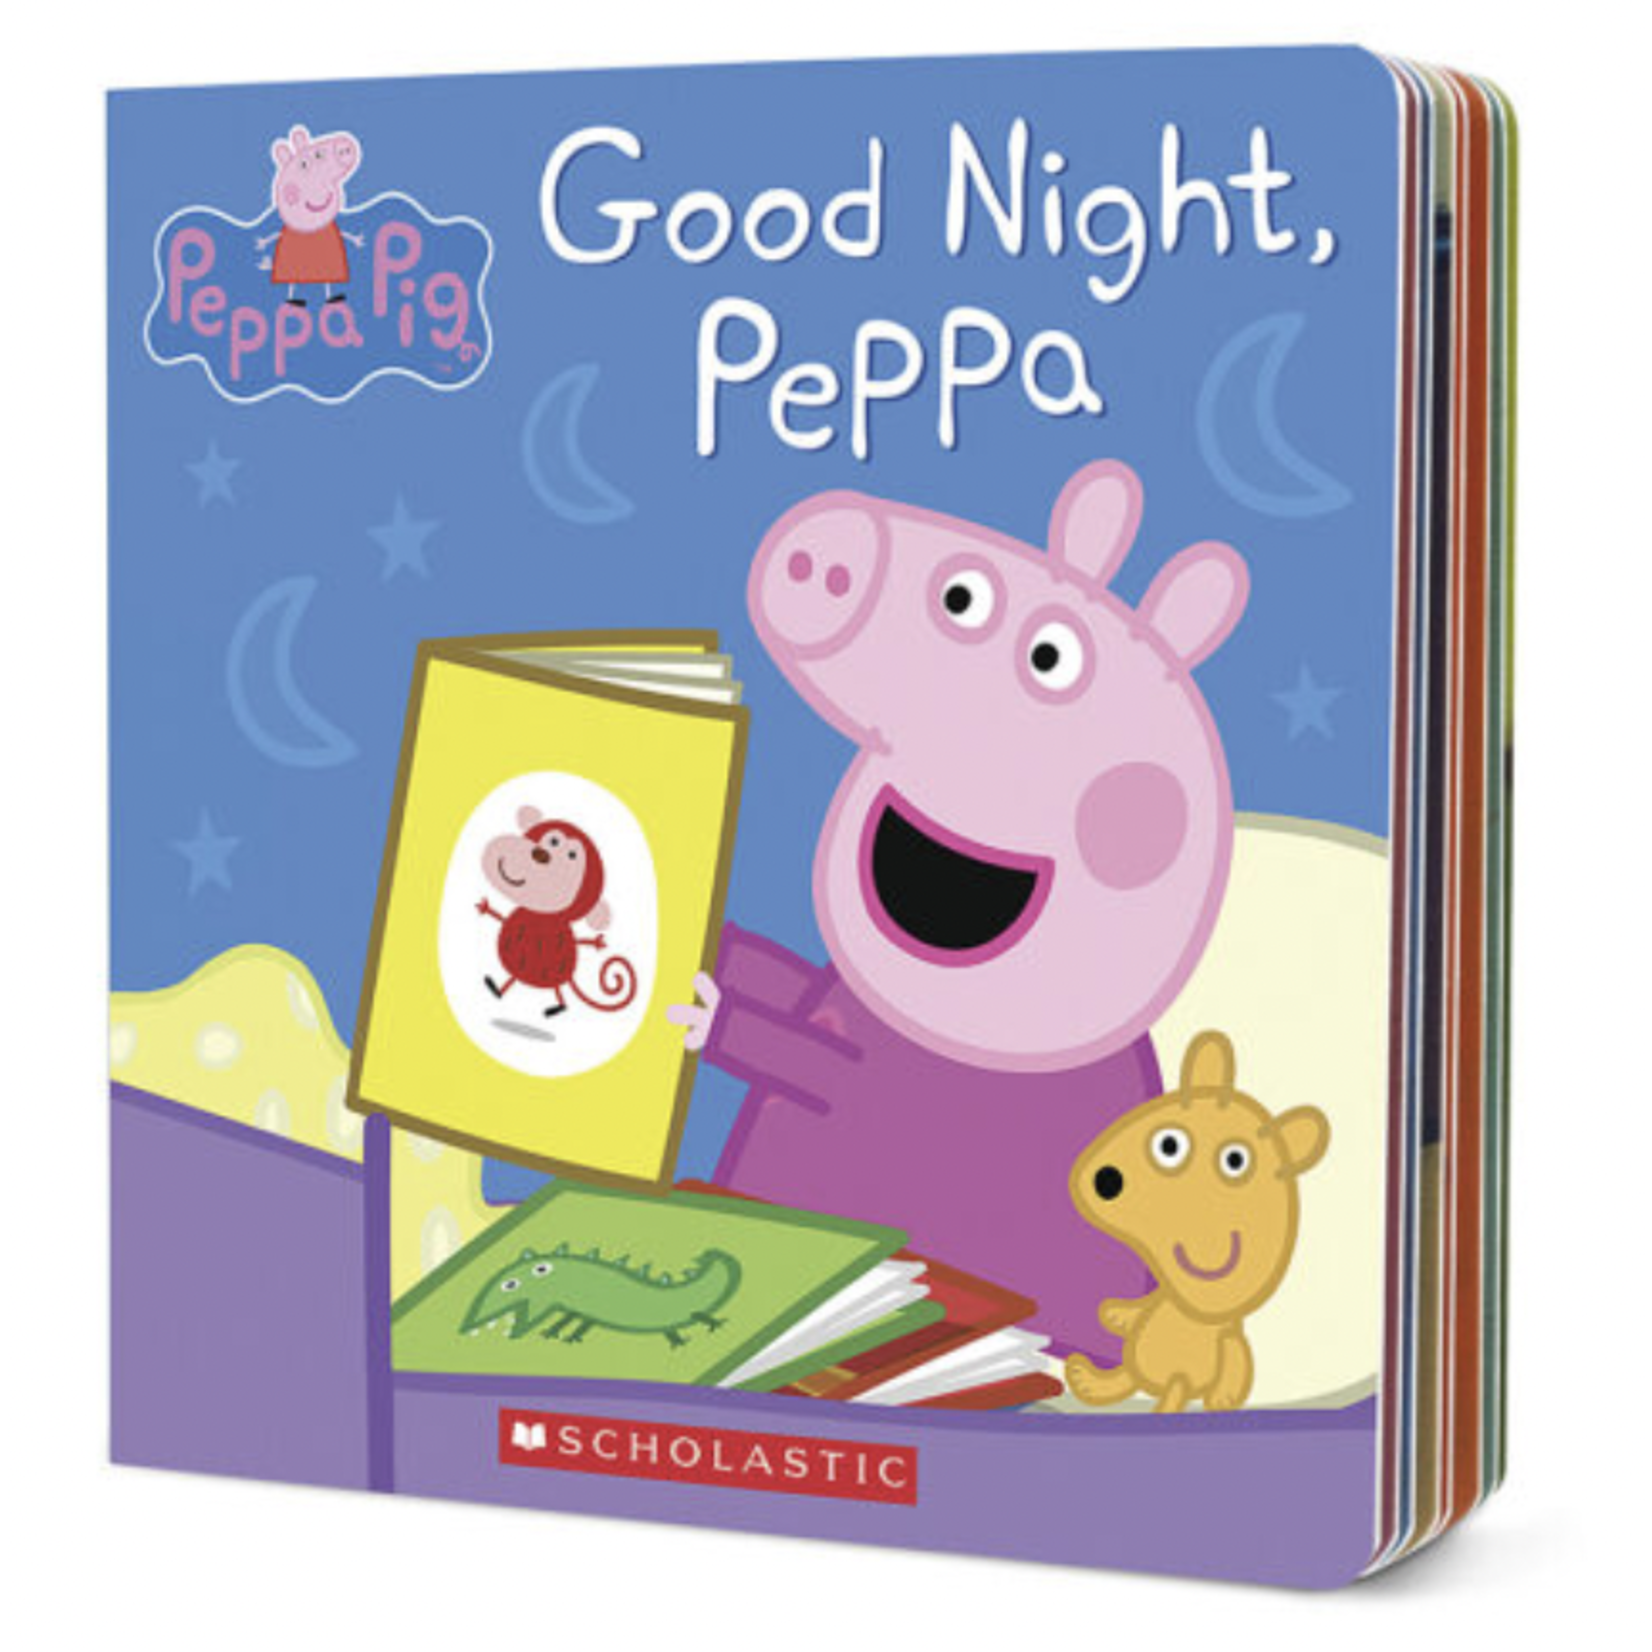 Brass　PIG:　The　NIGHT,　PEPPA　GOOD　PEPPA　Owl